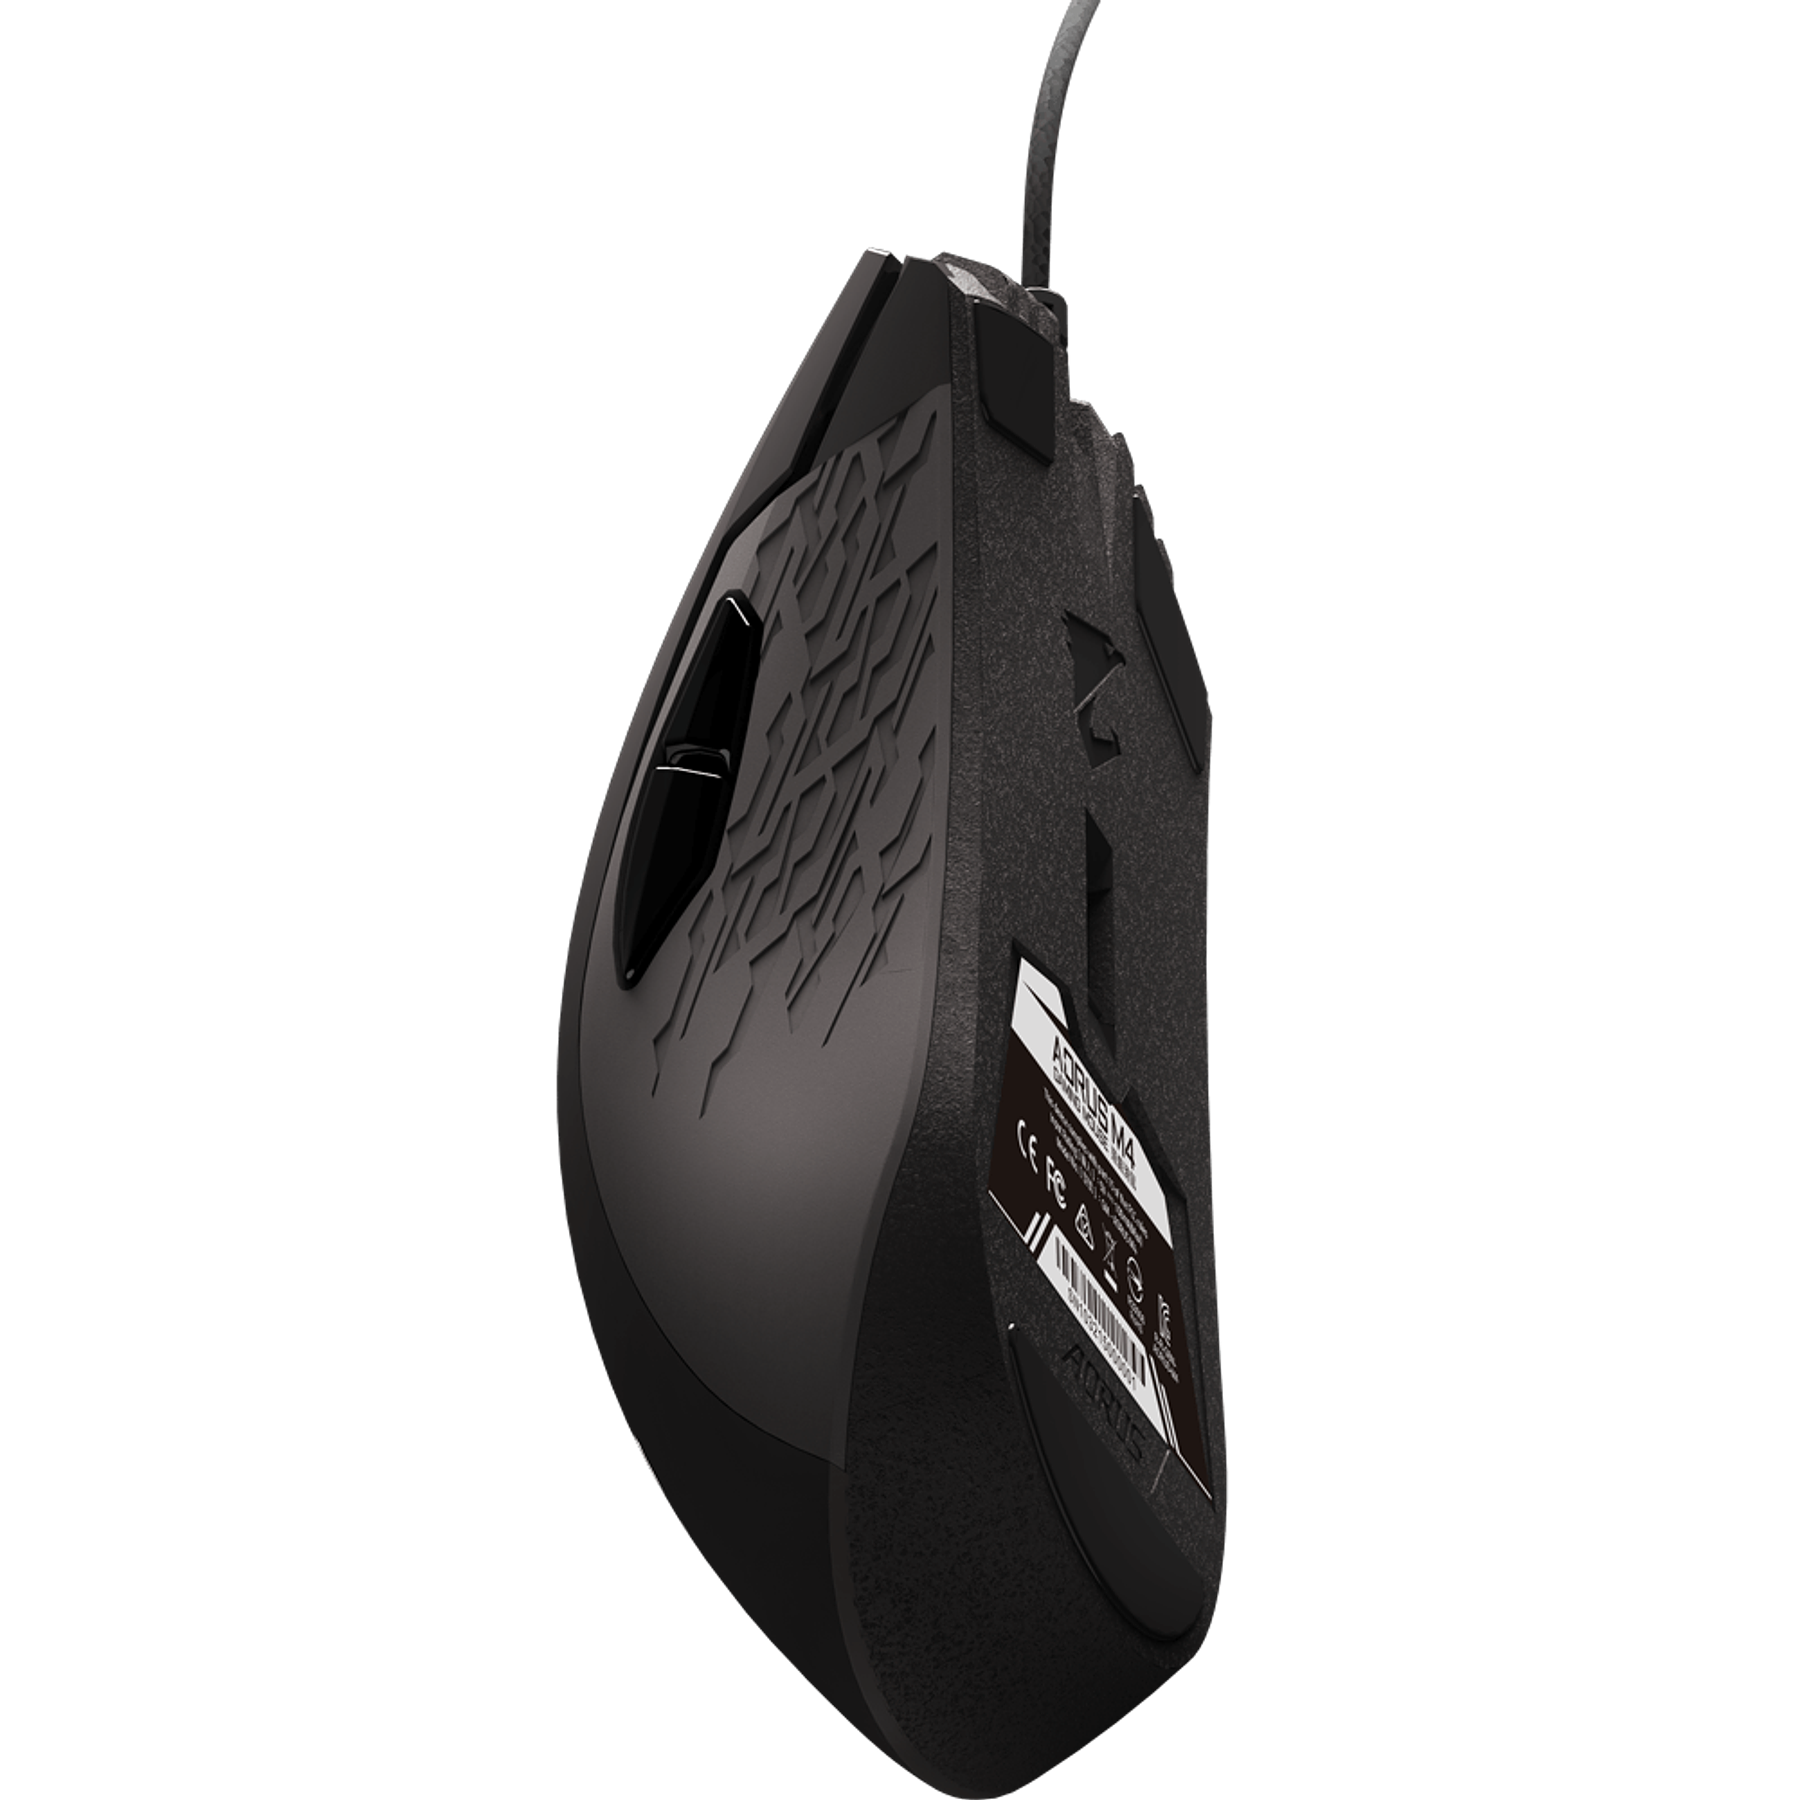 Aorus Mouse Gaming M4 USB Wired Black 6400 DPI RGB